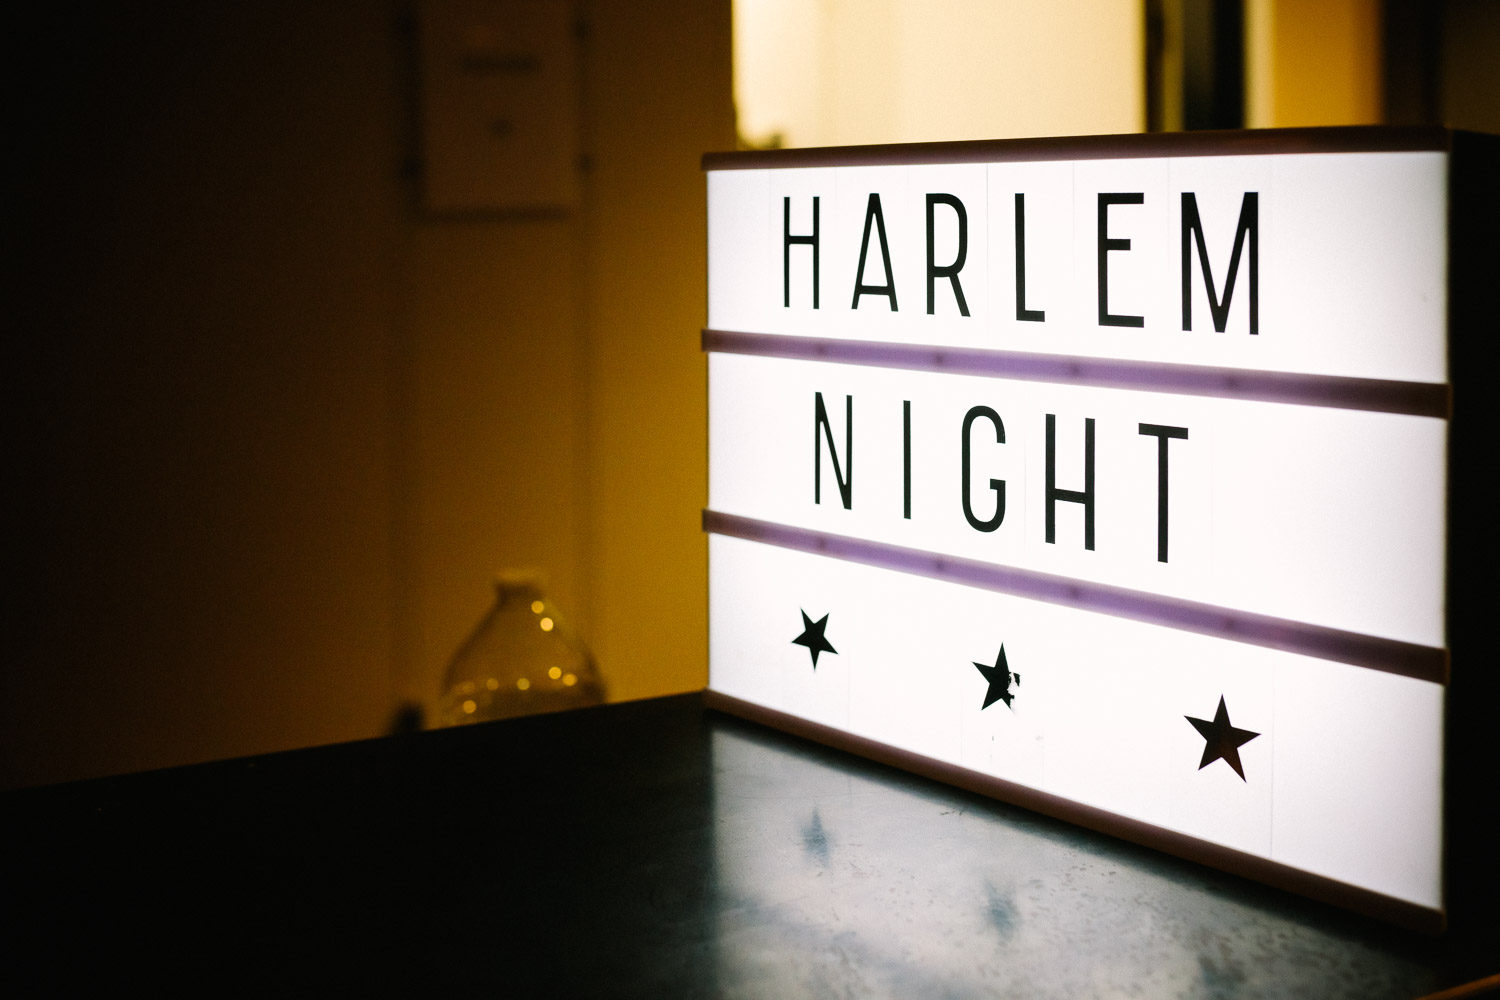  Harlem Night #4 au Pan Piper, https://jazzy-feet.com - Photo: www.fb.me/photosForDancersOnly - http://www.ebobrie.com/harlem-night-4 